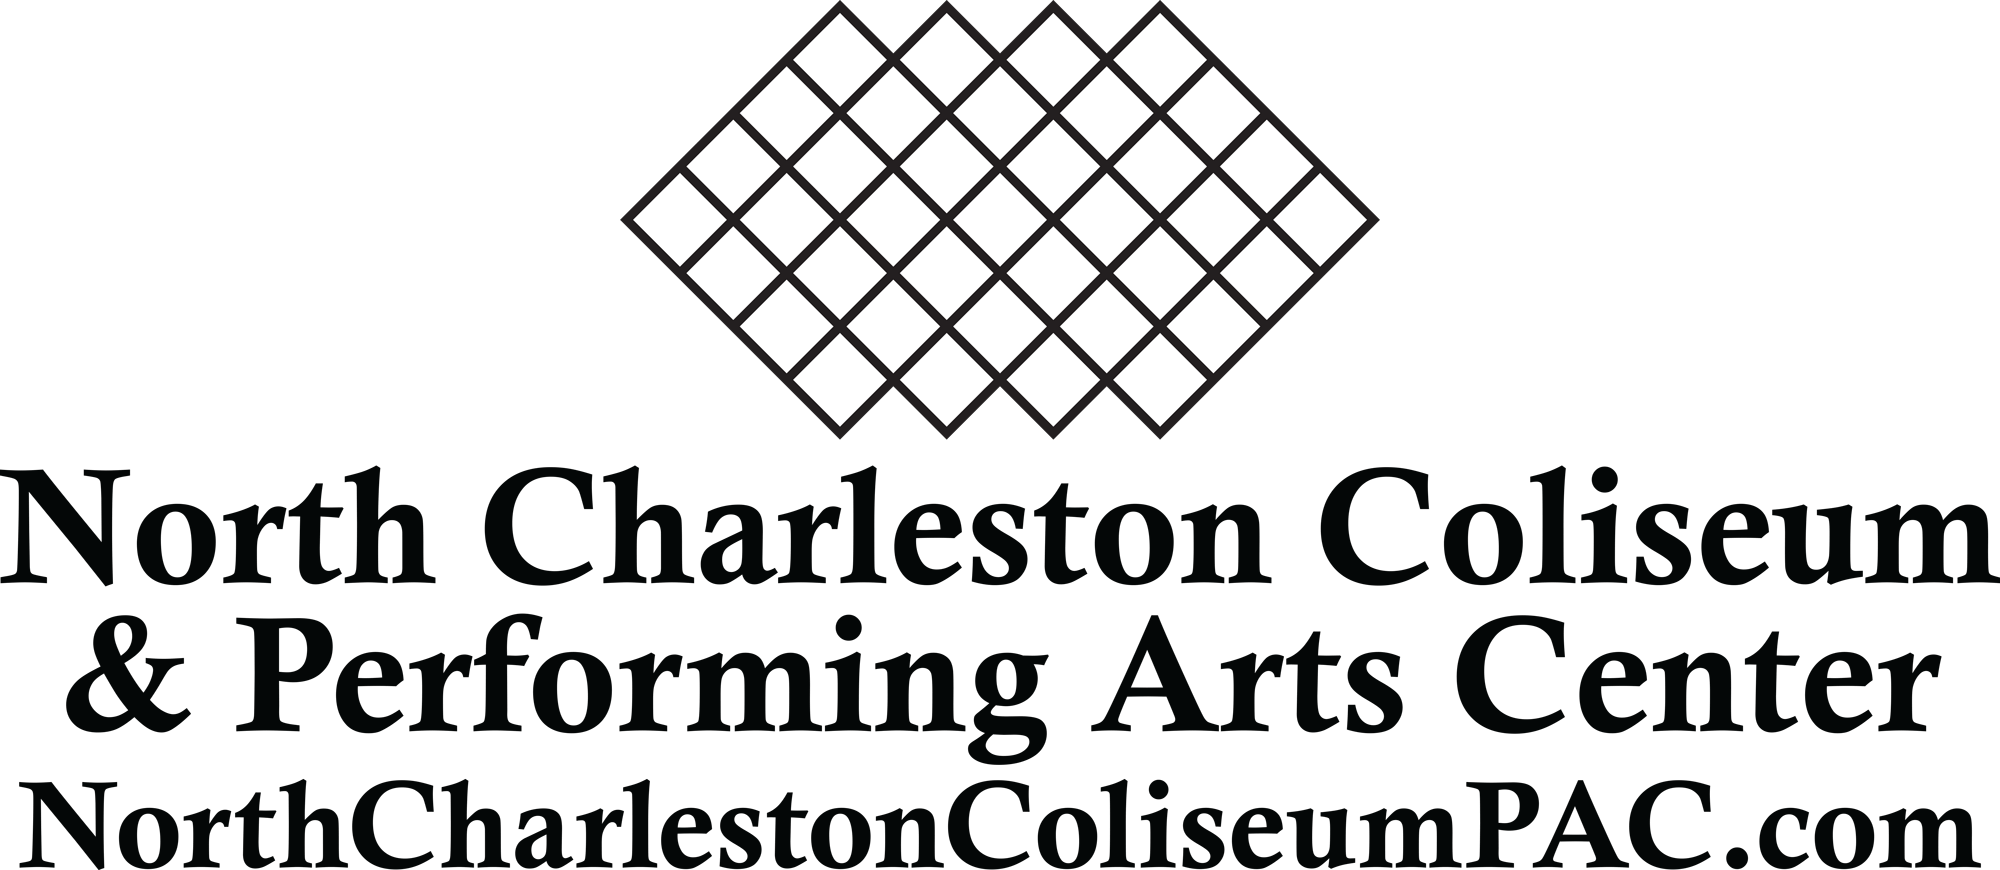 north charleston coliseum and performing arts center logo